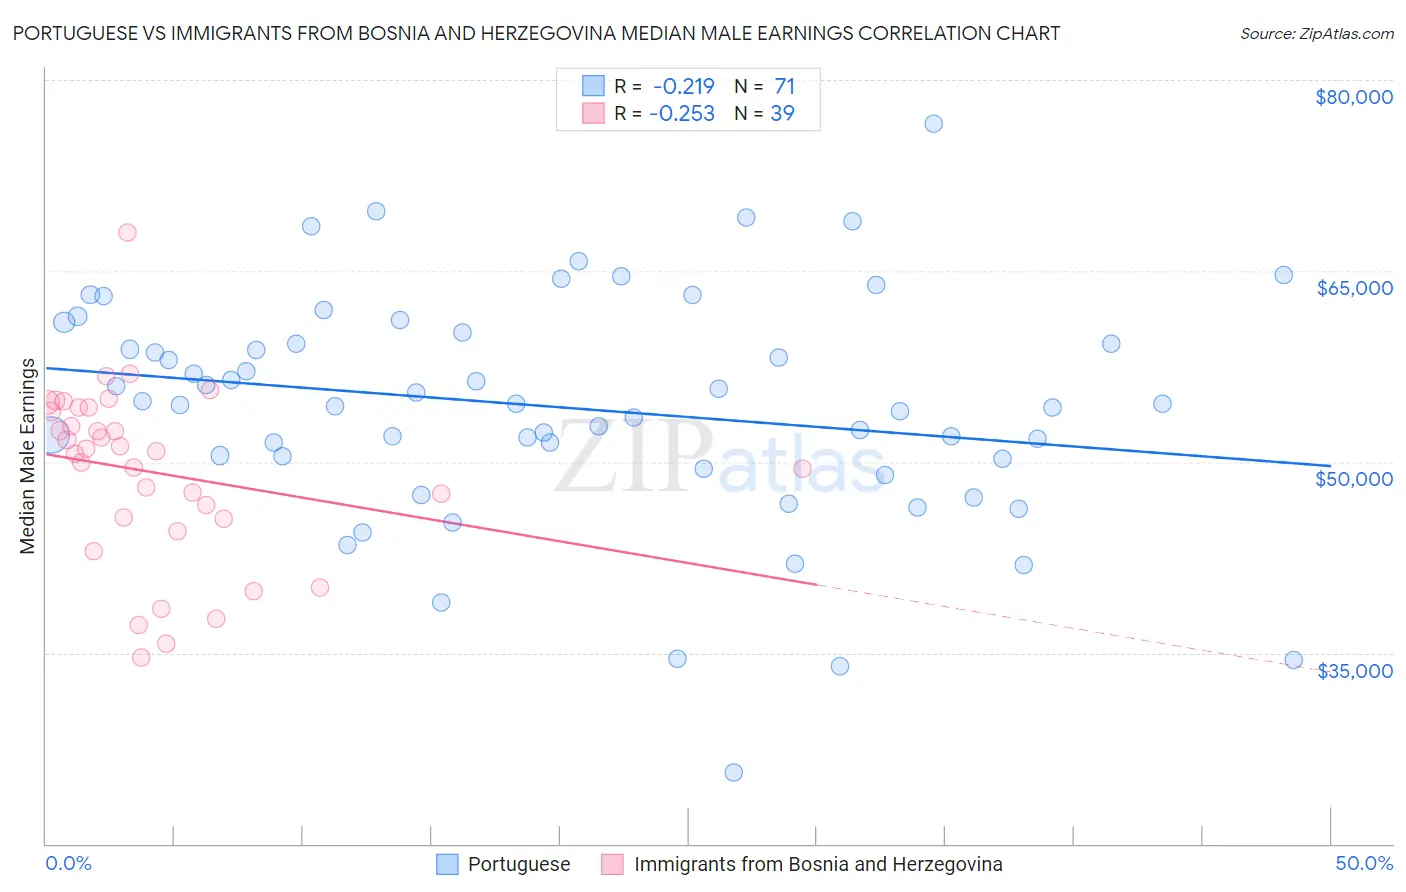 Portuguese vs Immigrants from Bosnia and Herzegovina Median Male Earnings